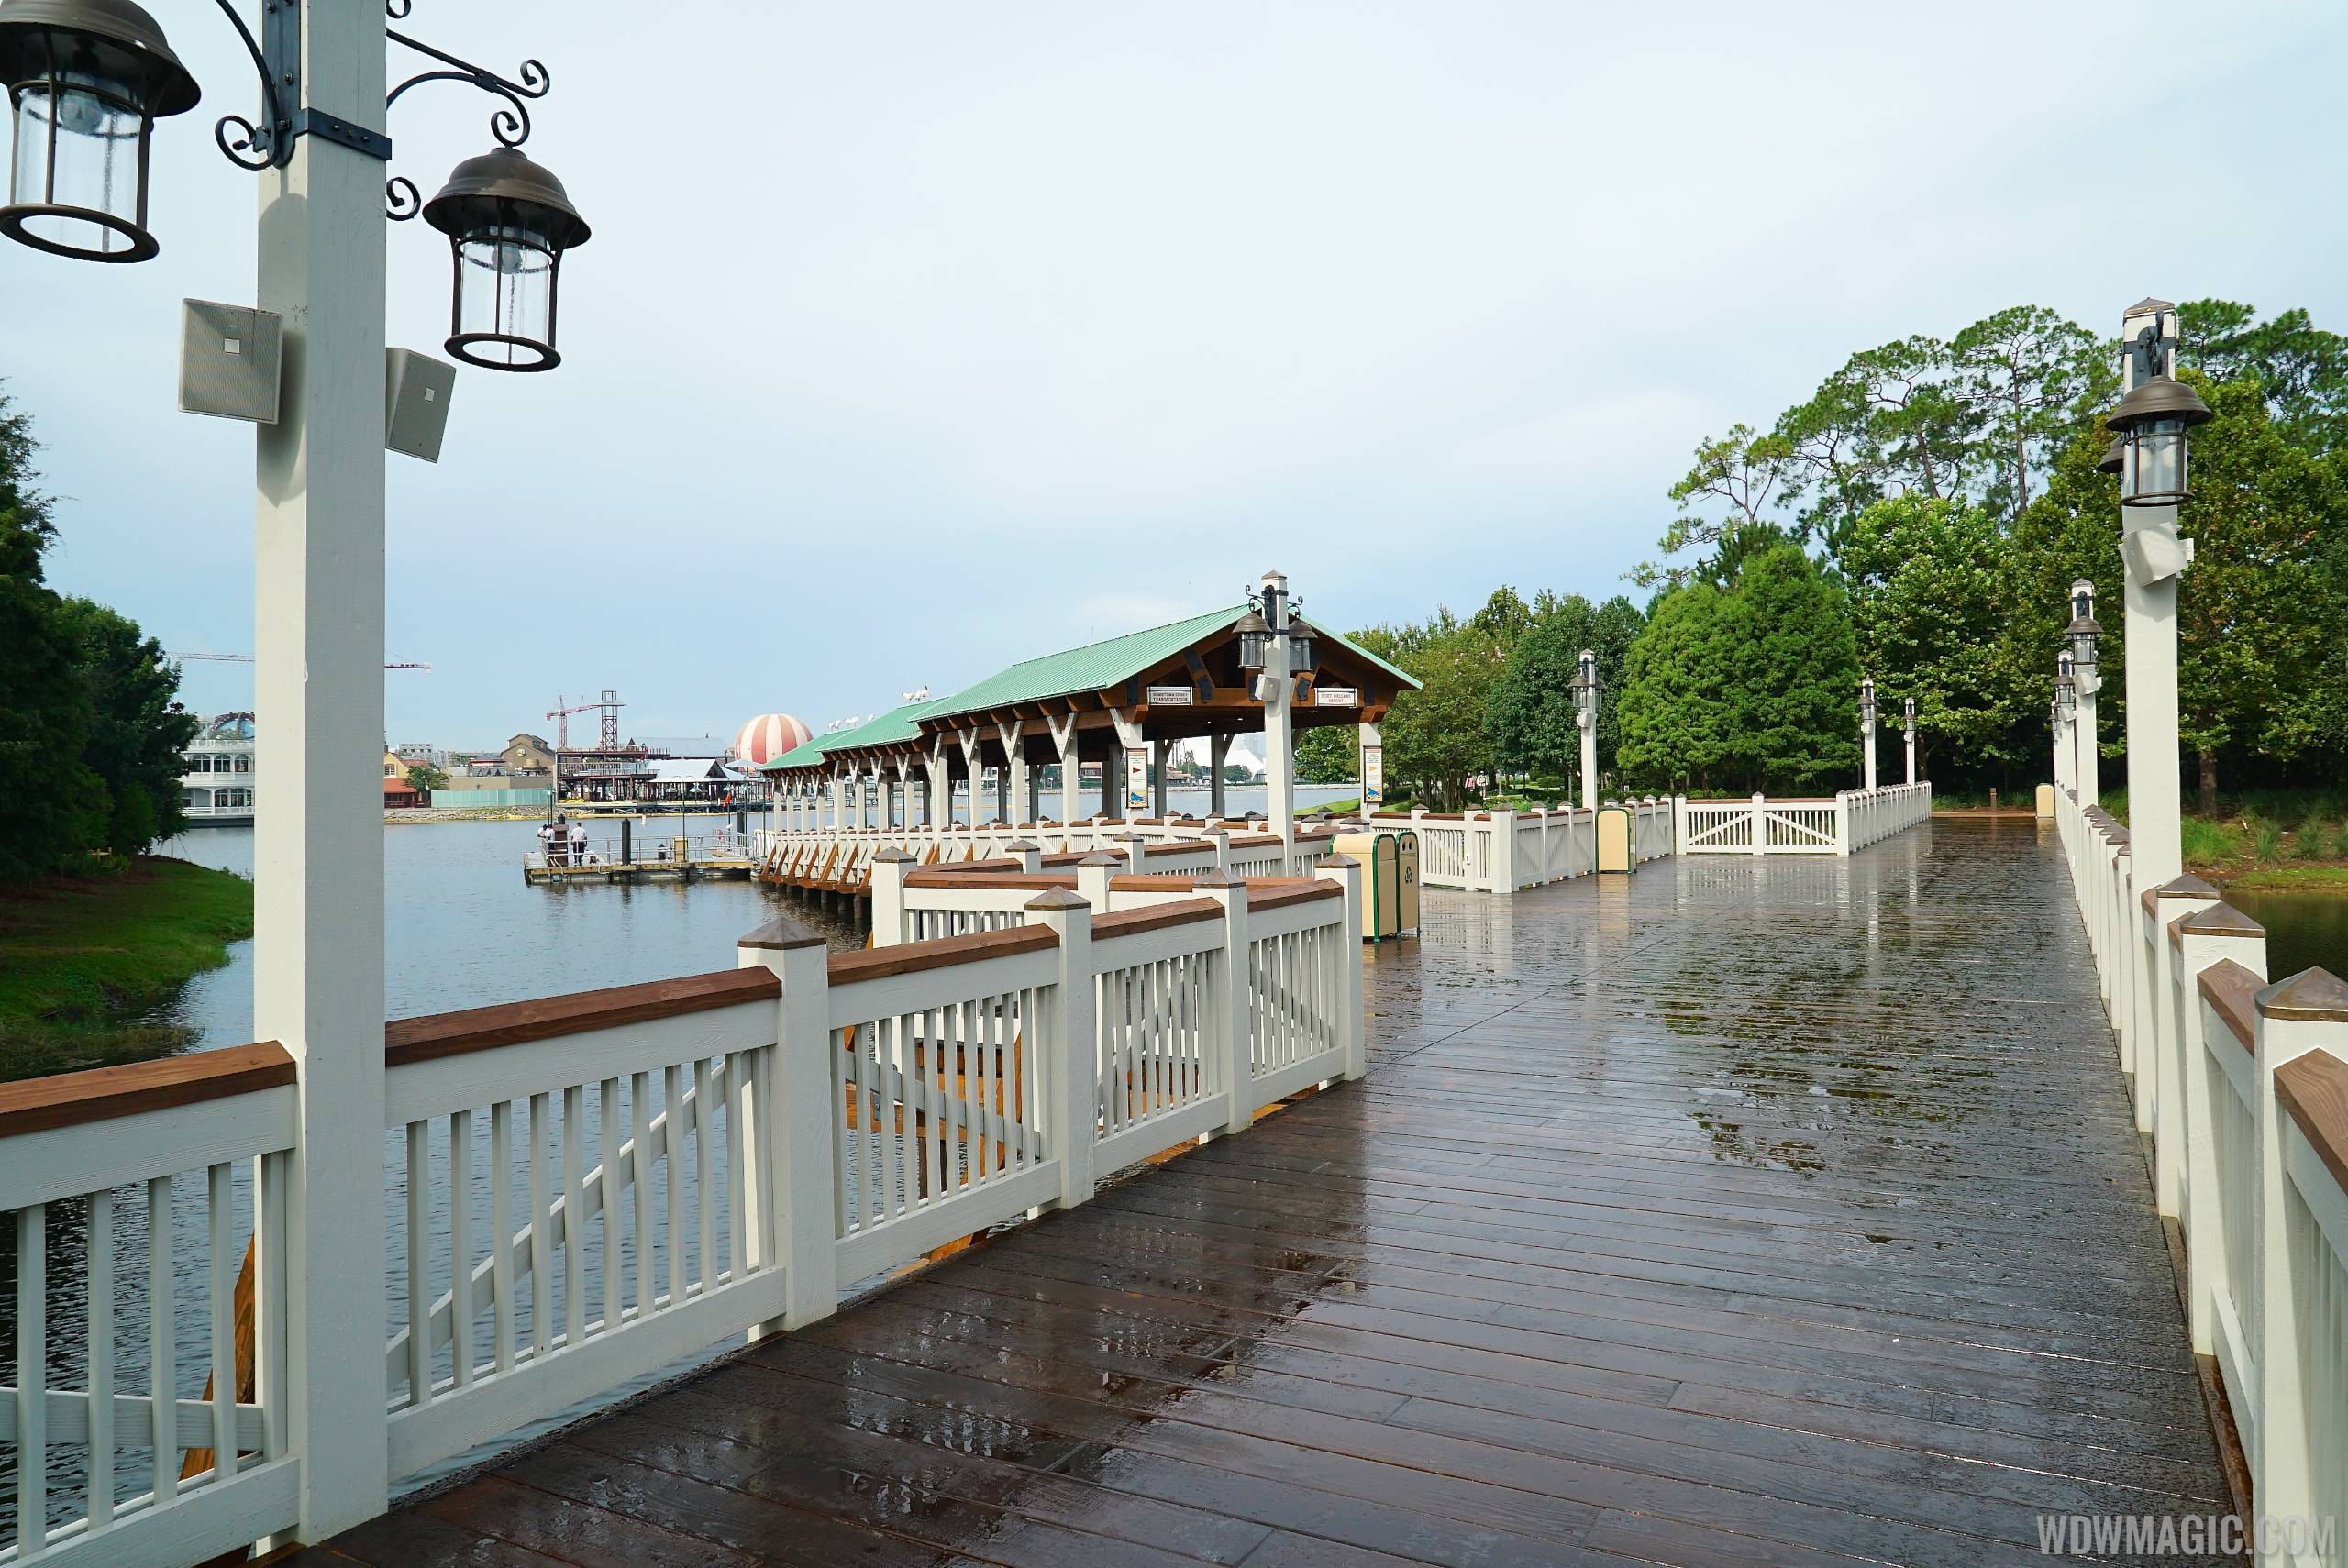 Marketplace to Saratoga Springs bridge and boat dock - Walkway and dock